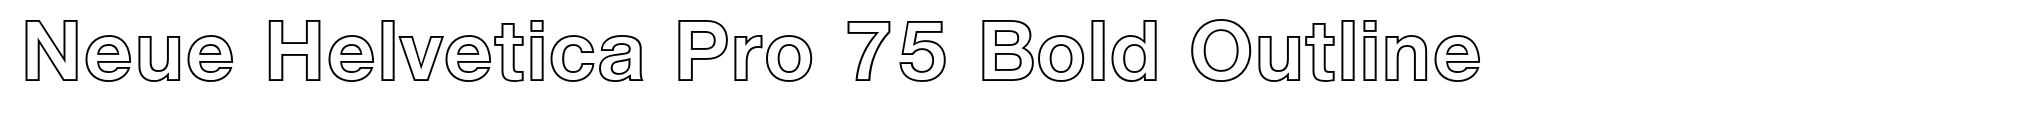 Neue Helvetica Pro 75 Bold Outline image